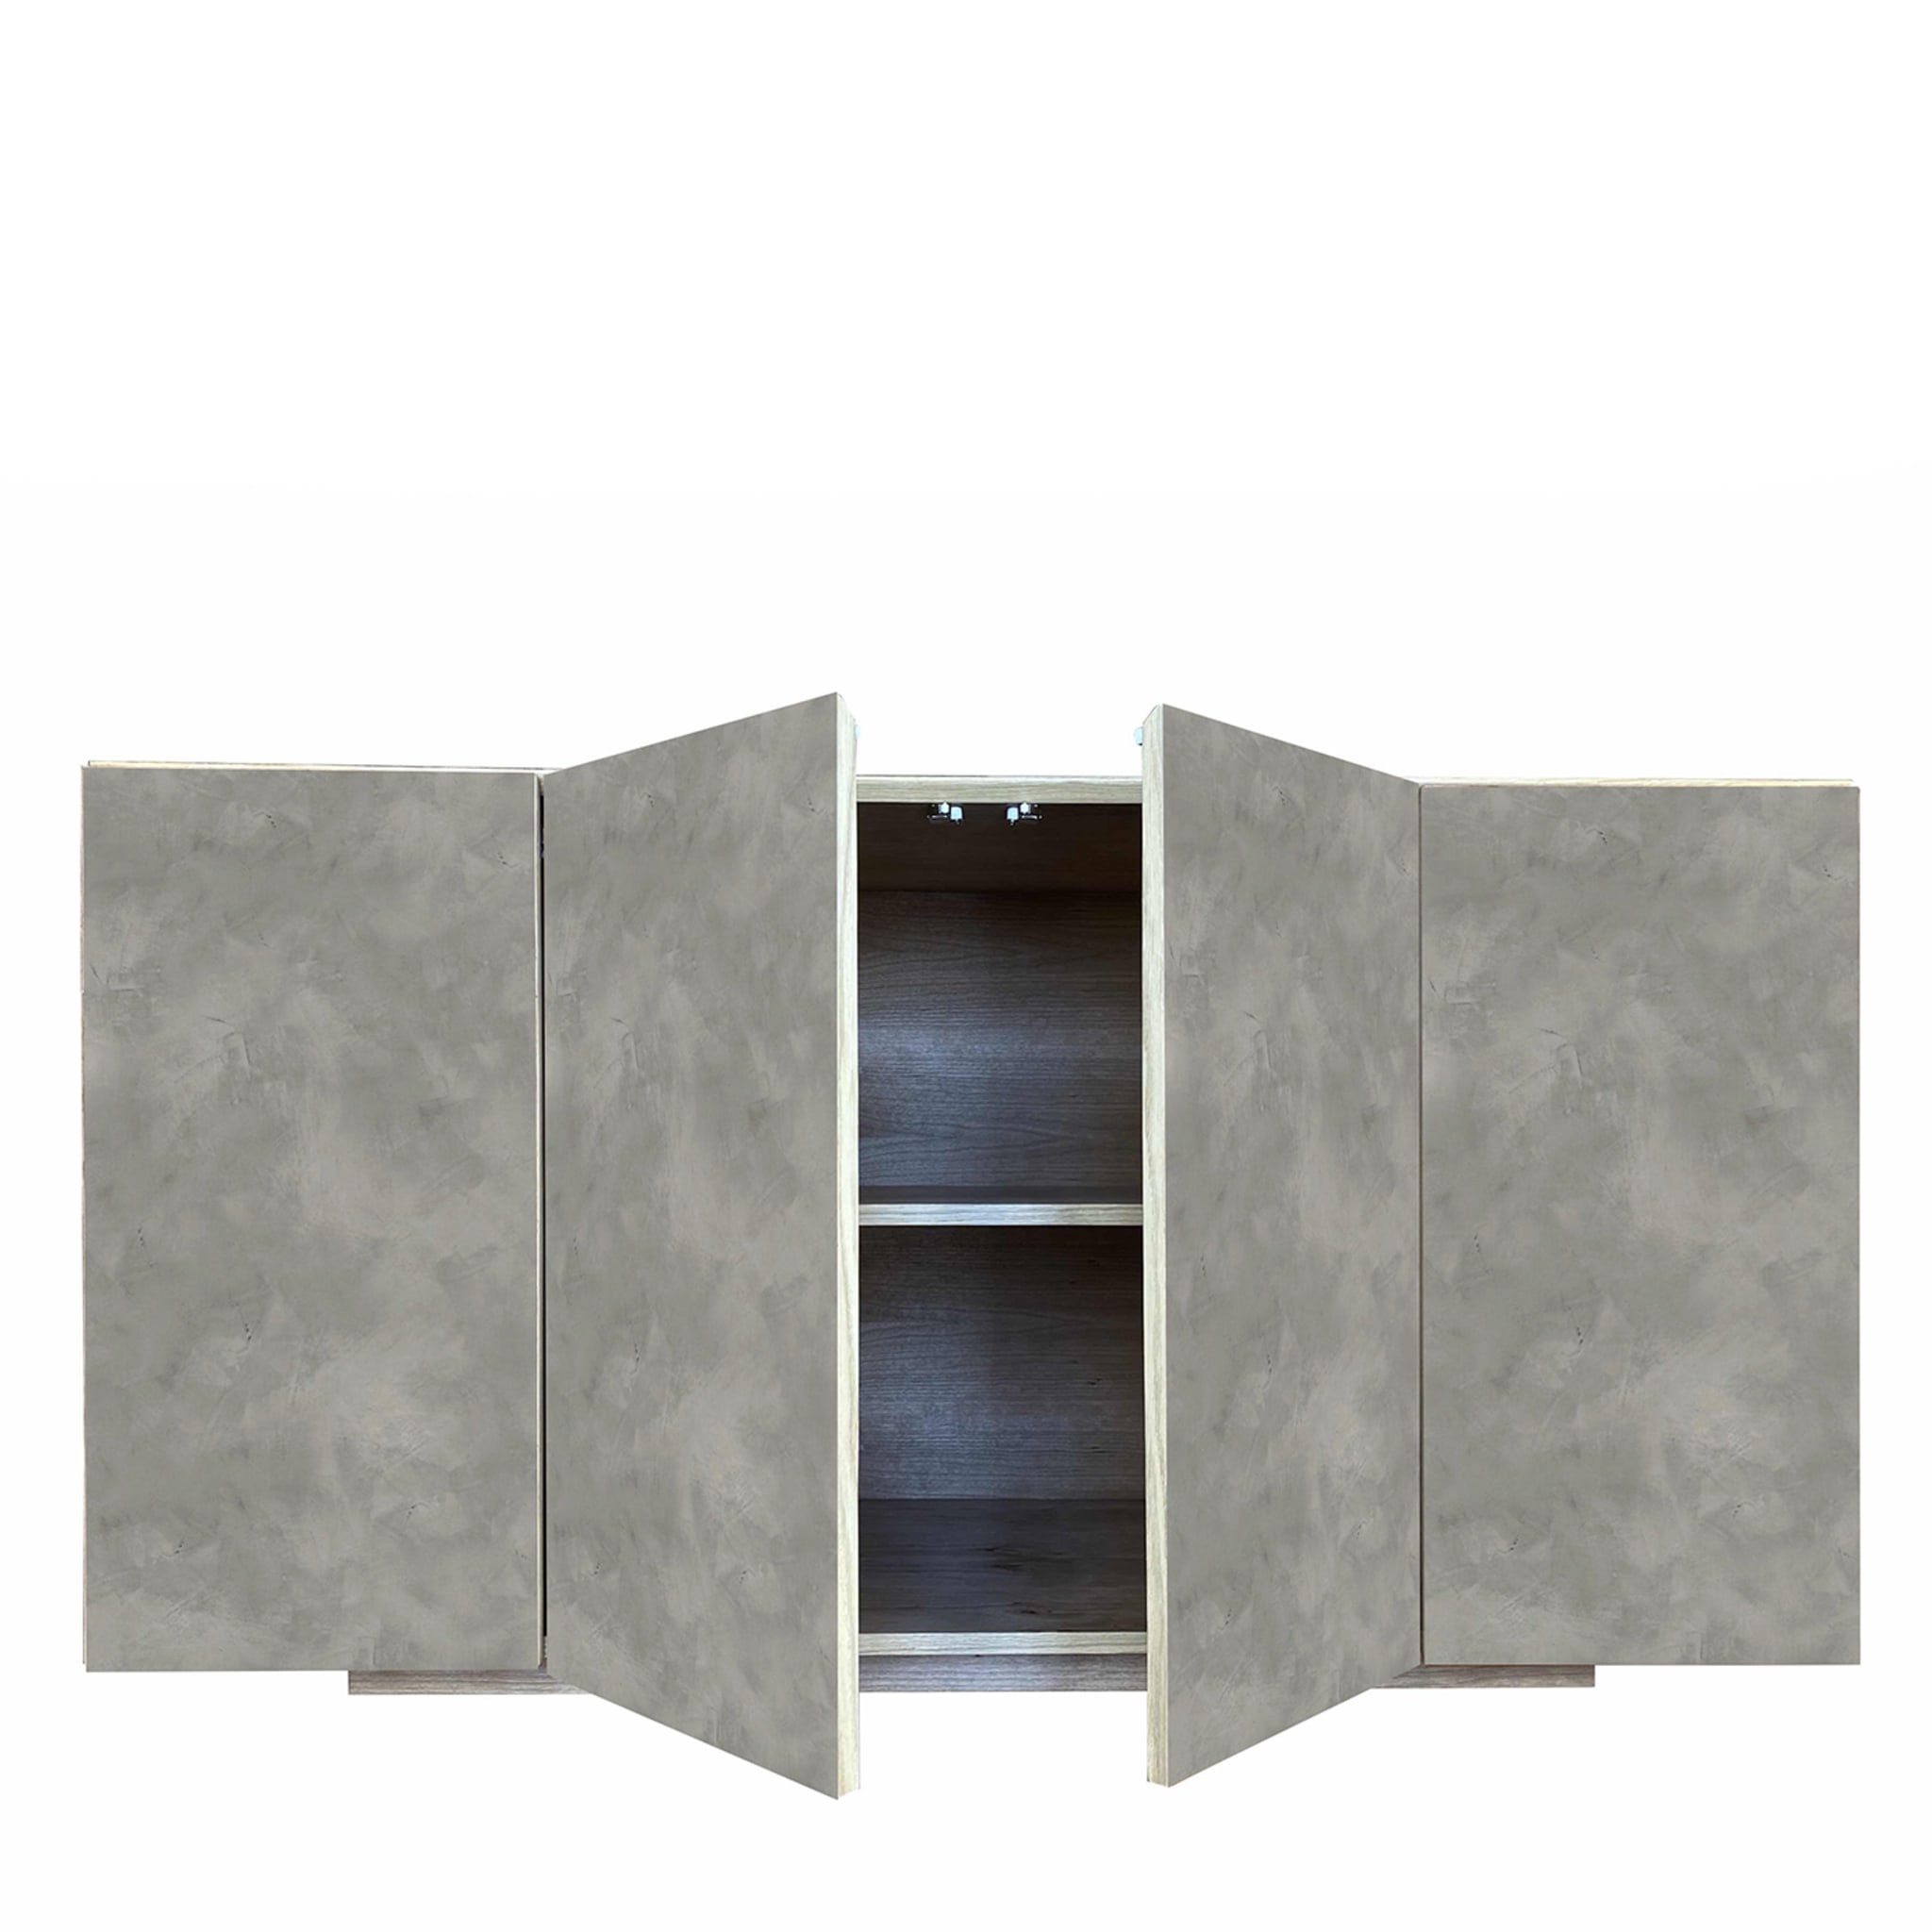 Boccadarno Otto 4-türiges graues Sideboard von Meccani Studio - Alternative Ansicht 5